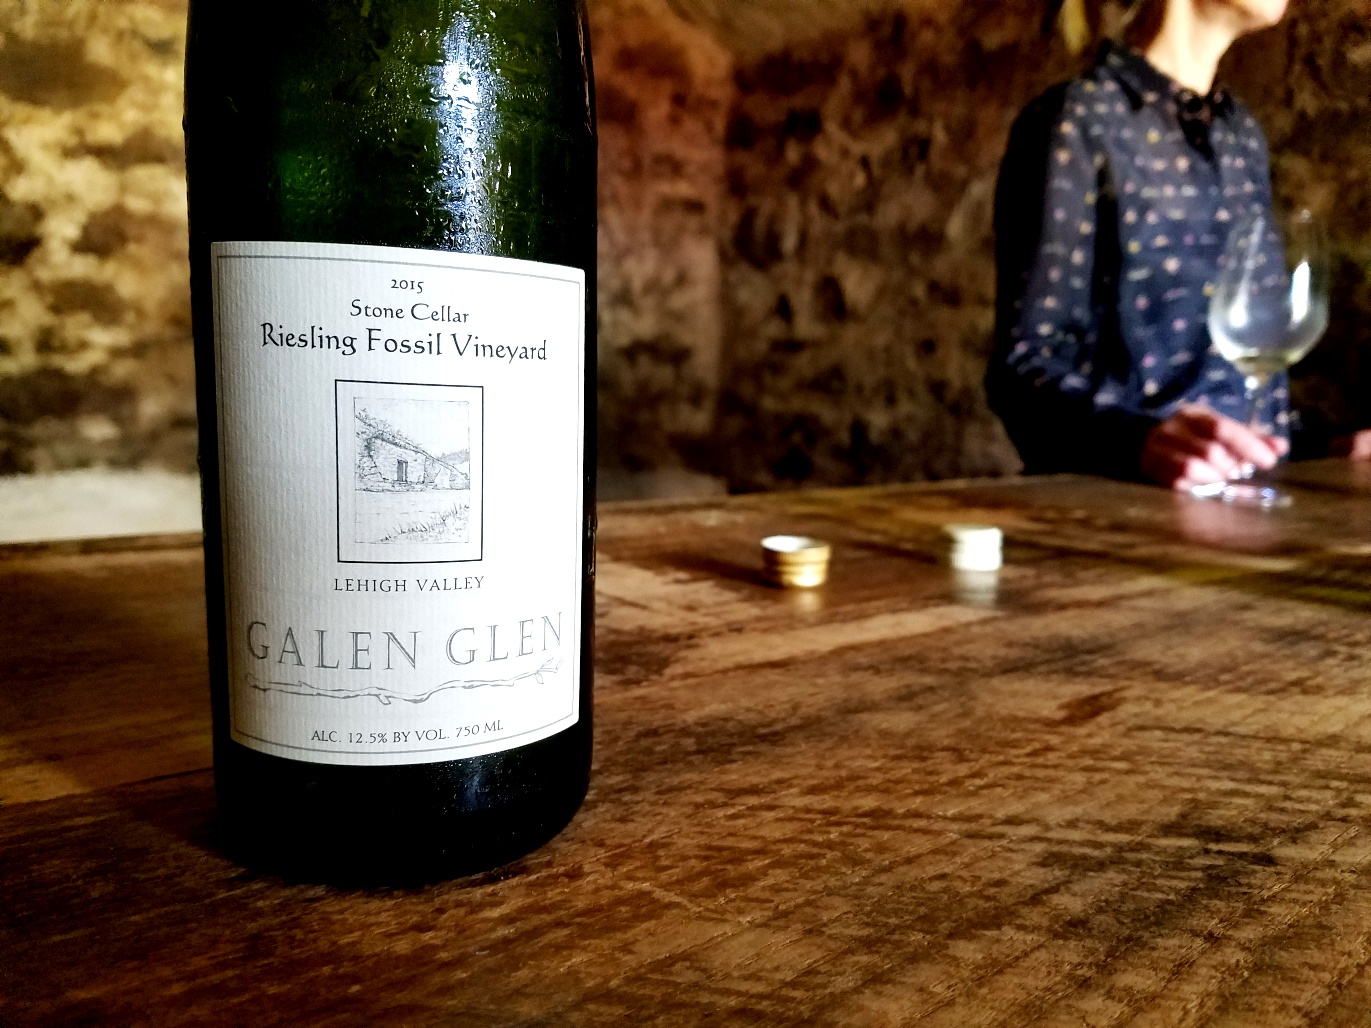 Galen Glen, Riesling GJT Vineyard 2015, Stone Cellar, Lehigh Valley, Pennsylvania, Wine Casual